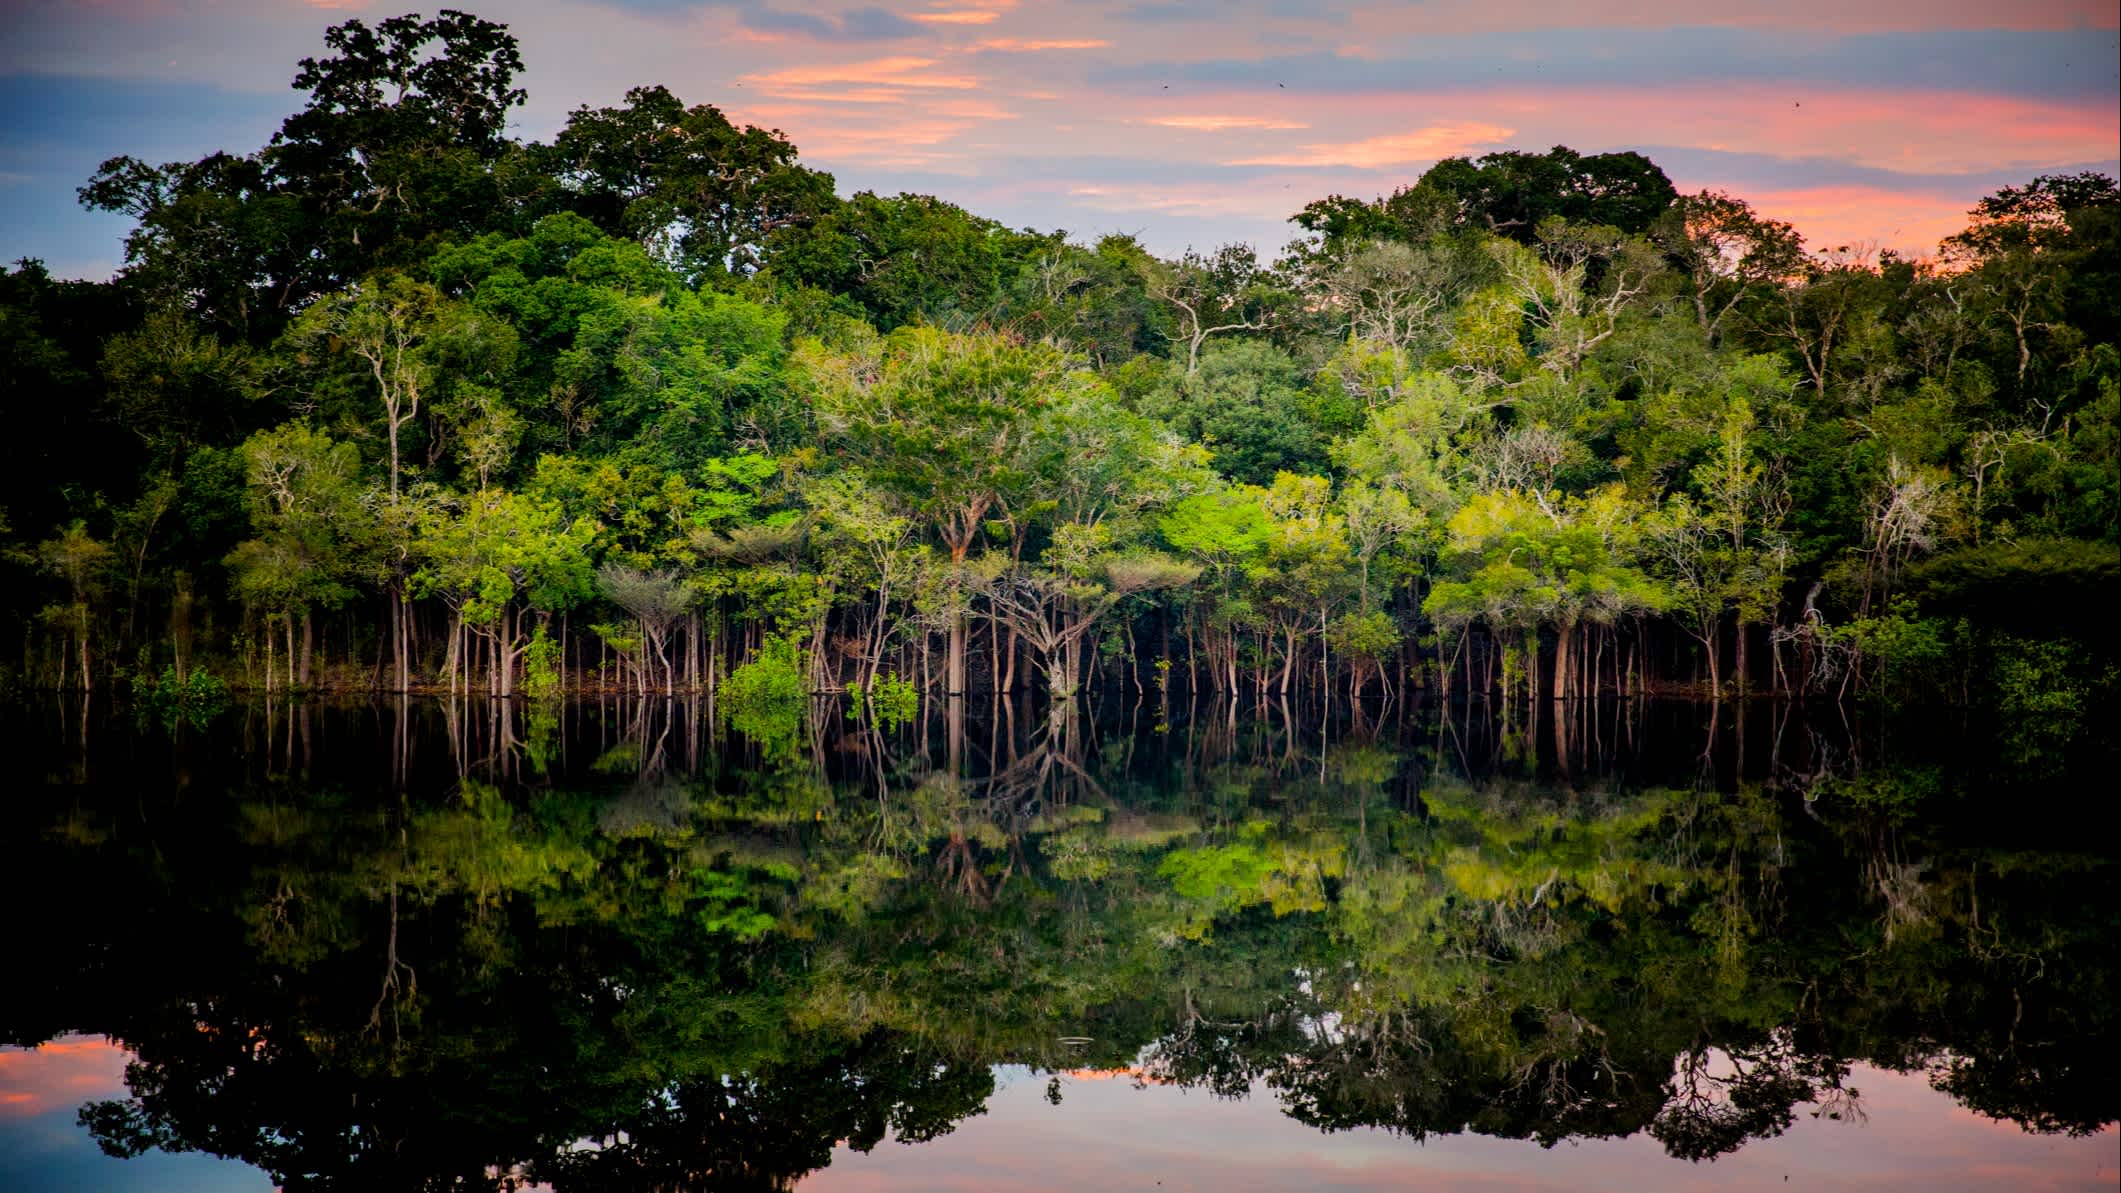 Der Sonnenuntergang in Amazonas, Brasilien
